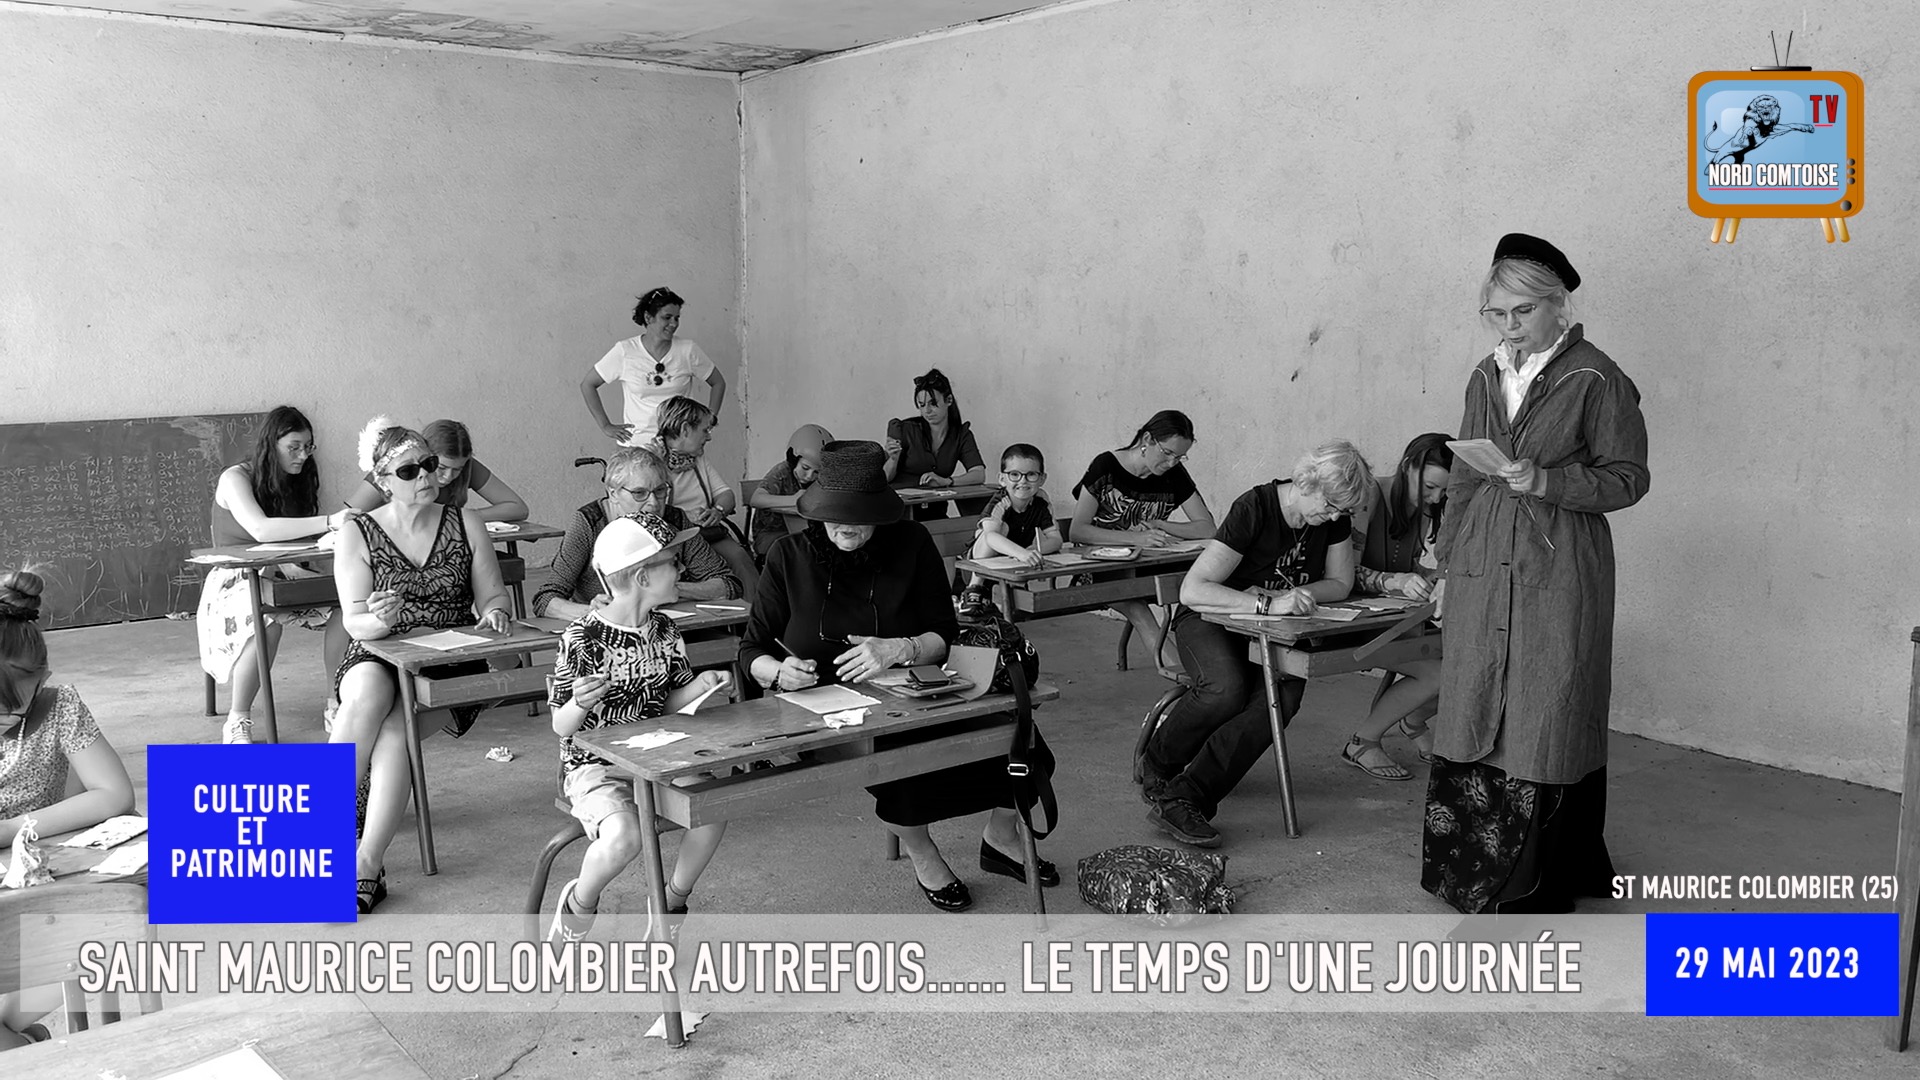 ST MAURICE COLOMBIER ……..AUTREFOIS